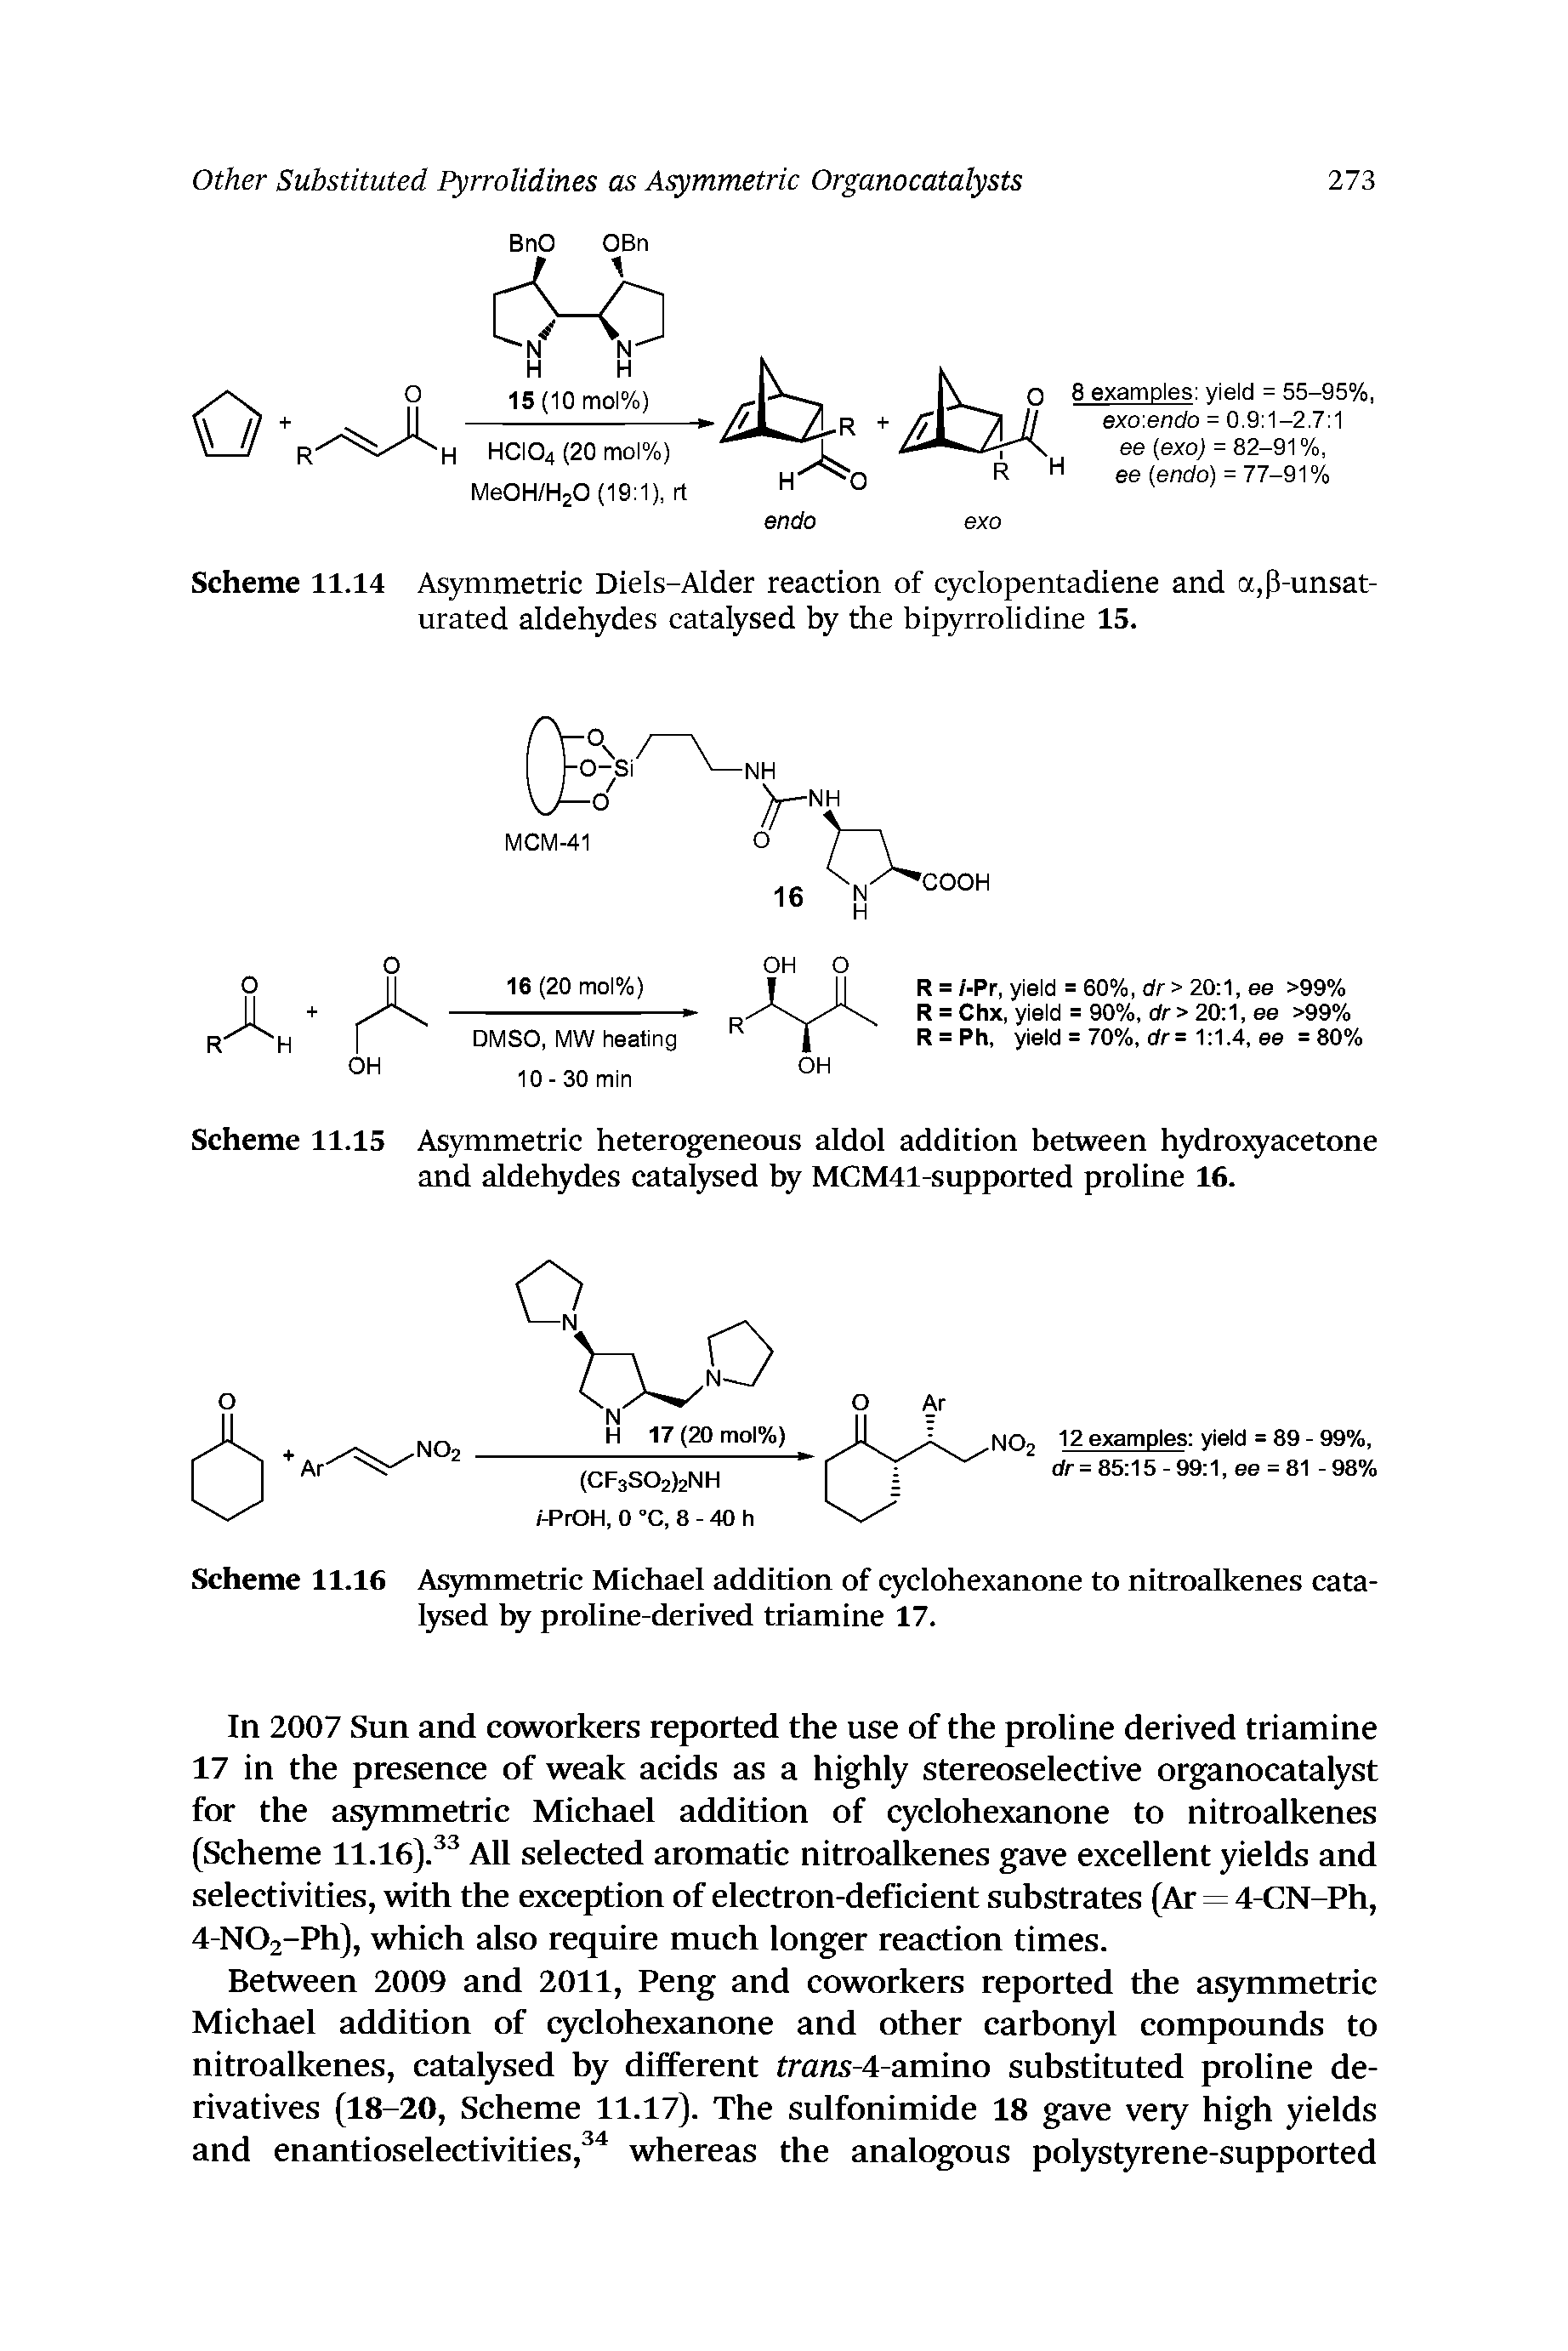 Scheme 11.16 Aqmametric Michael addition of cyclohexanone to nitroalkenes cata-tysed by proline-derived triamine 17.